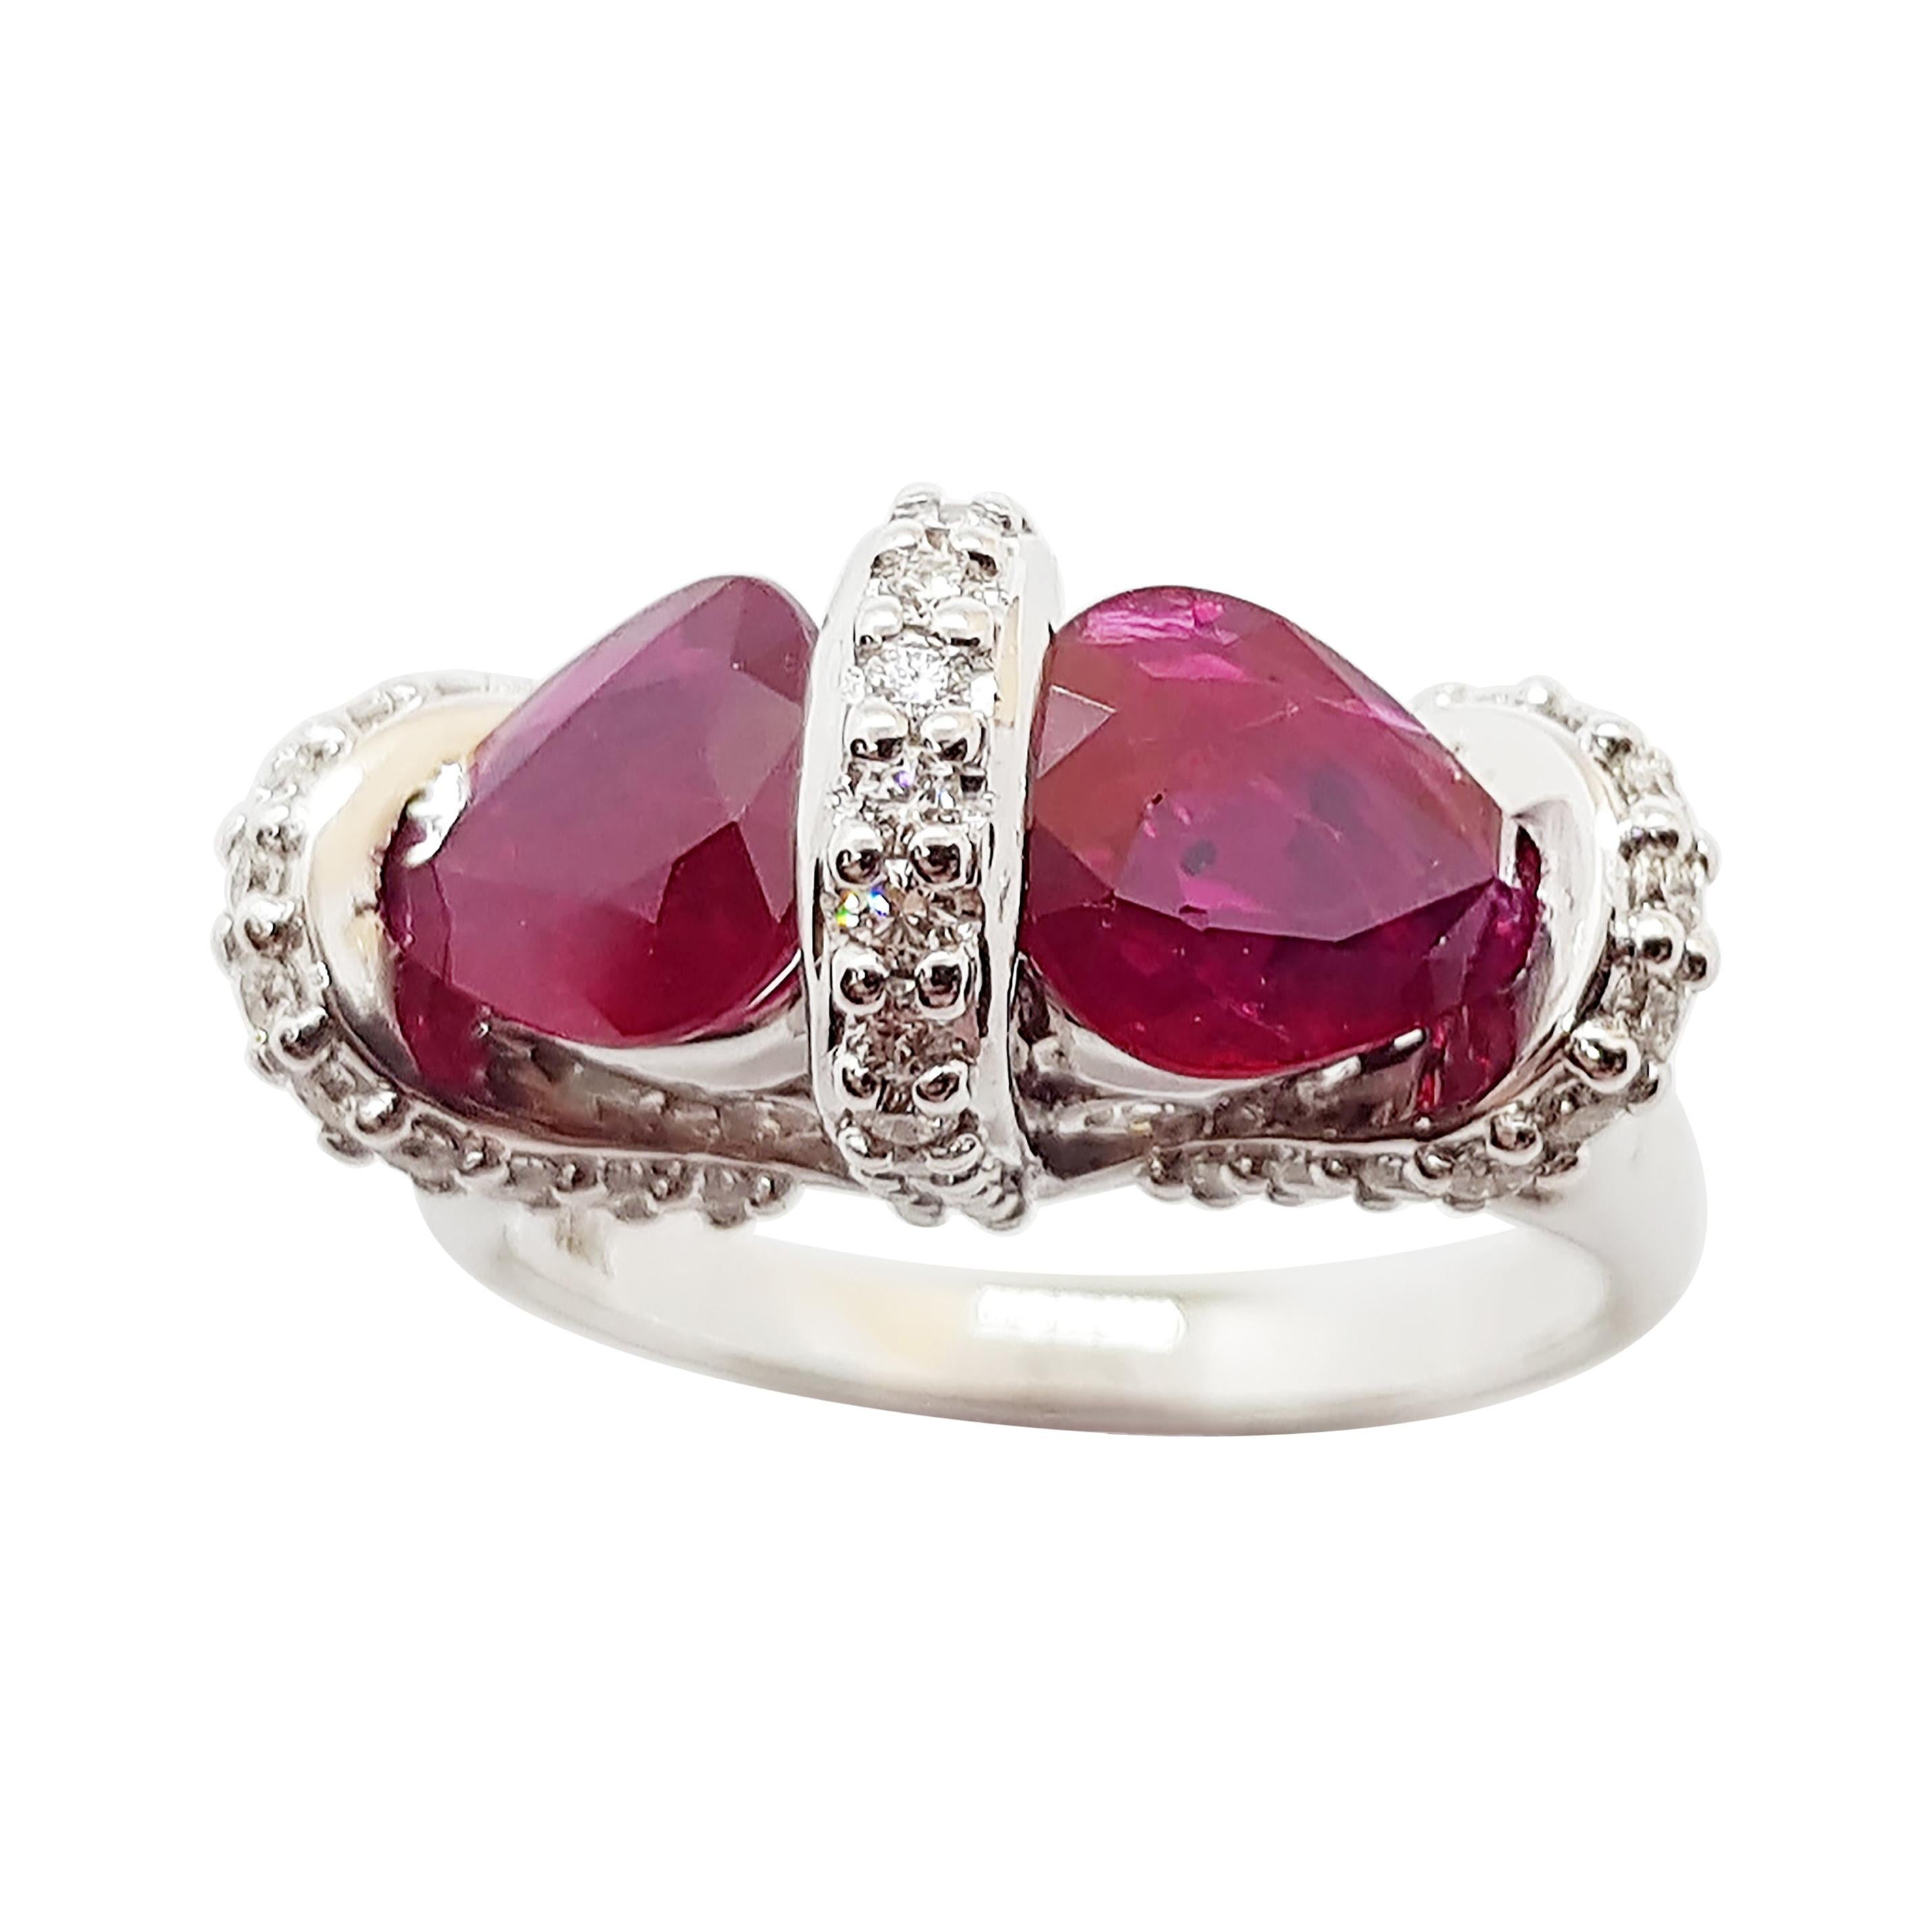 Ruby with Diamond Ring Set in 18 Karat White Gold Settings